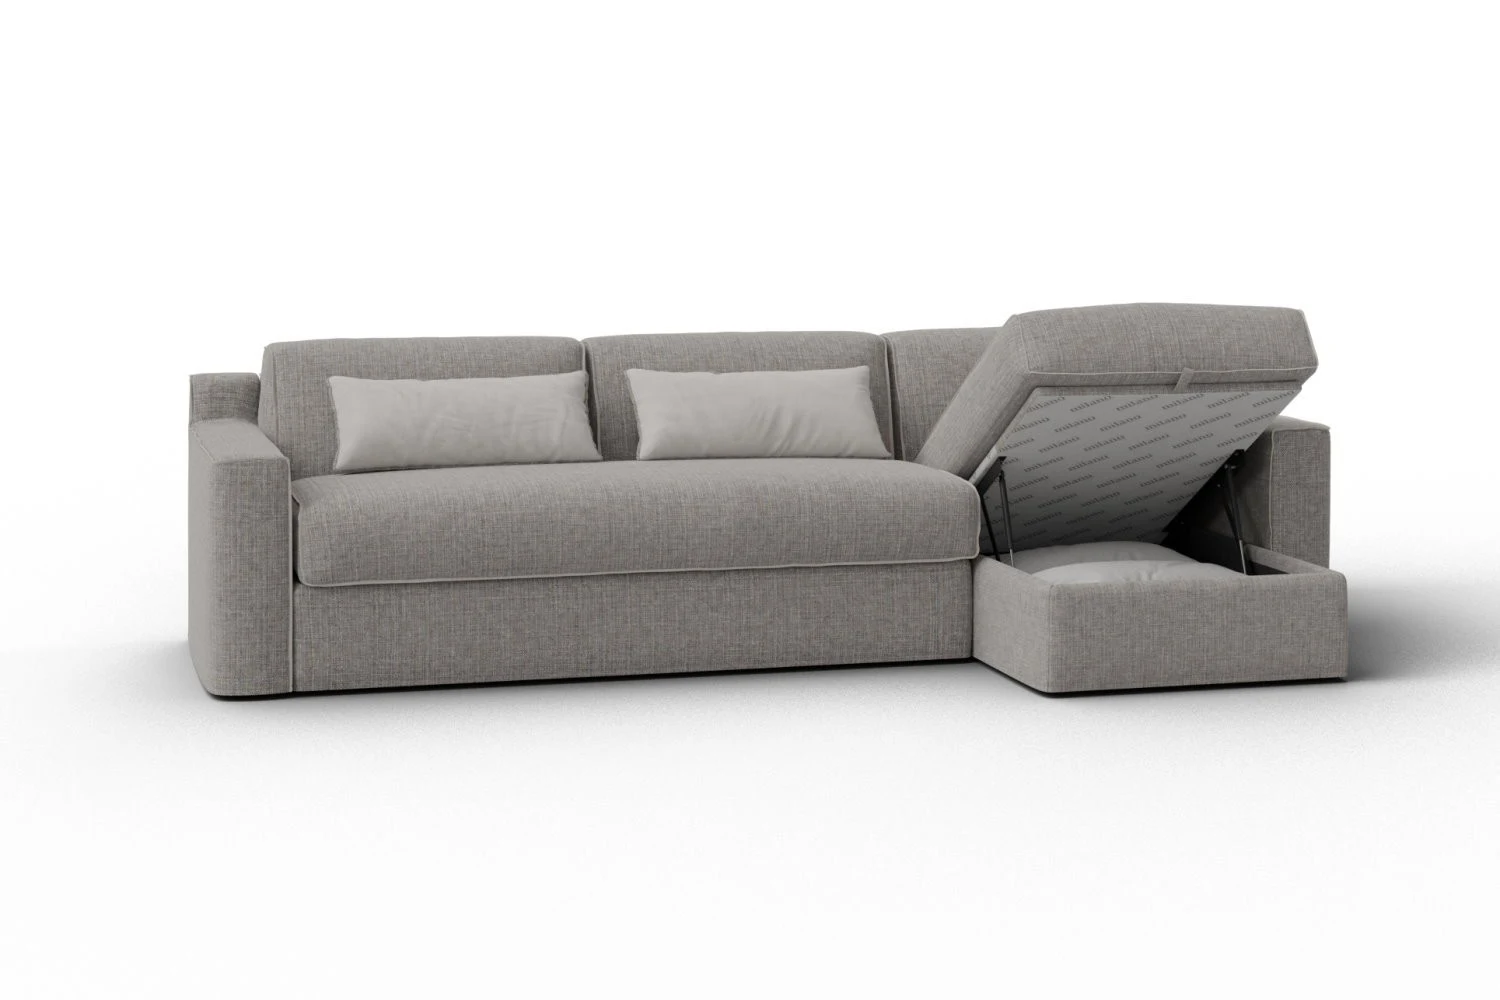 Jarreau 3 seater sofa bed Milano bedding FMDESIGN